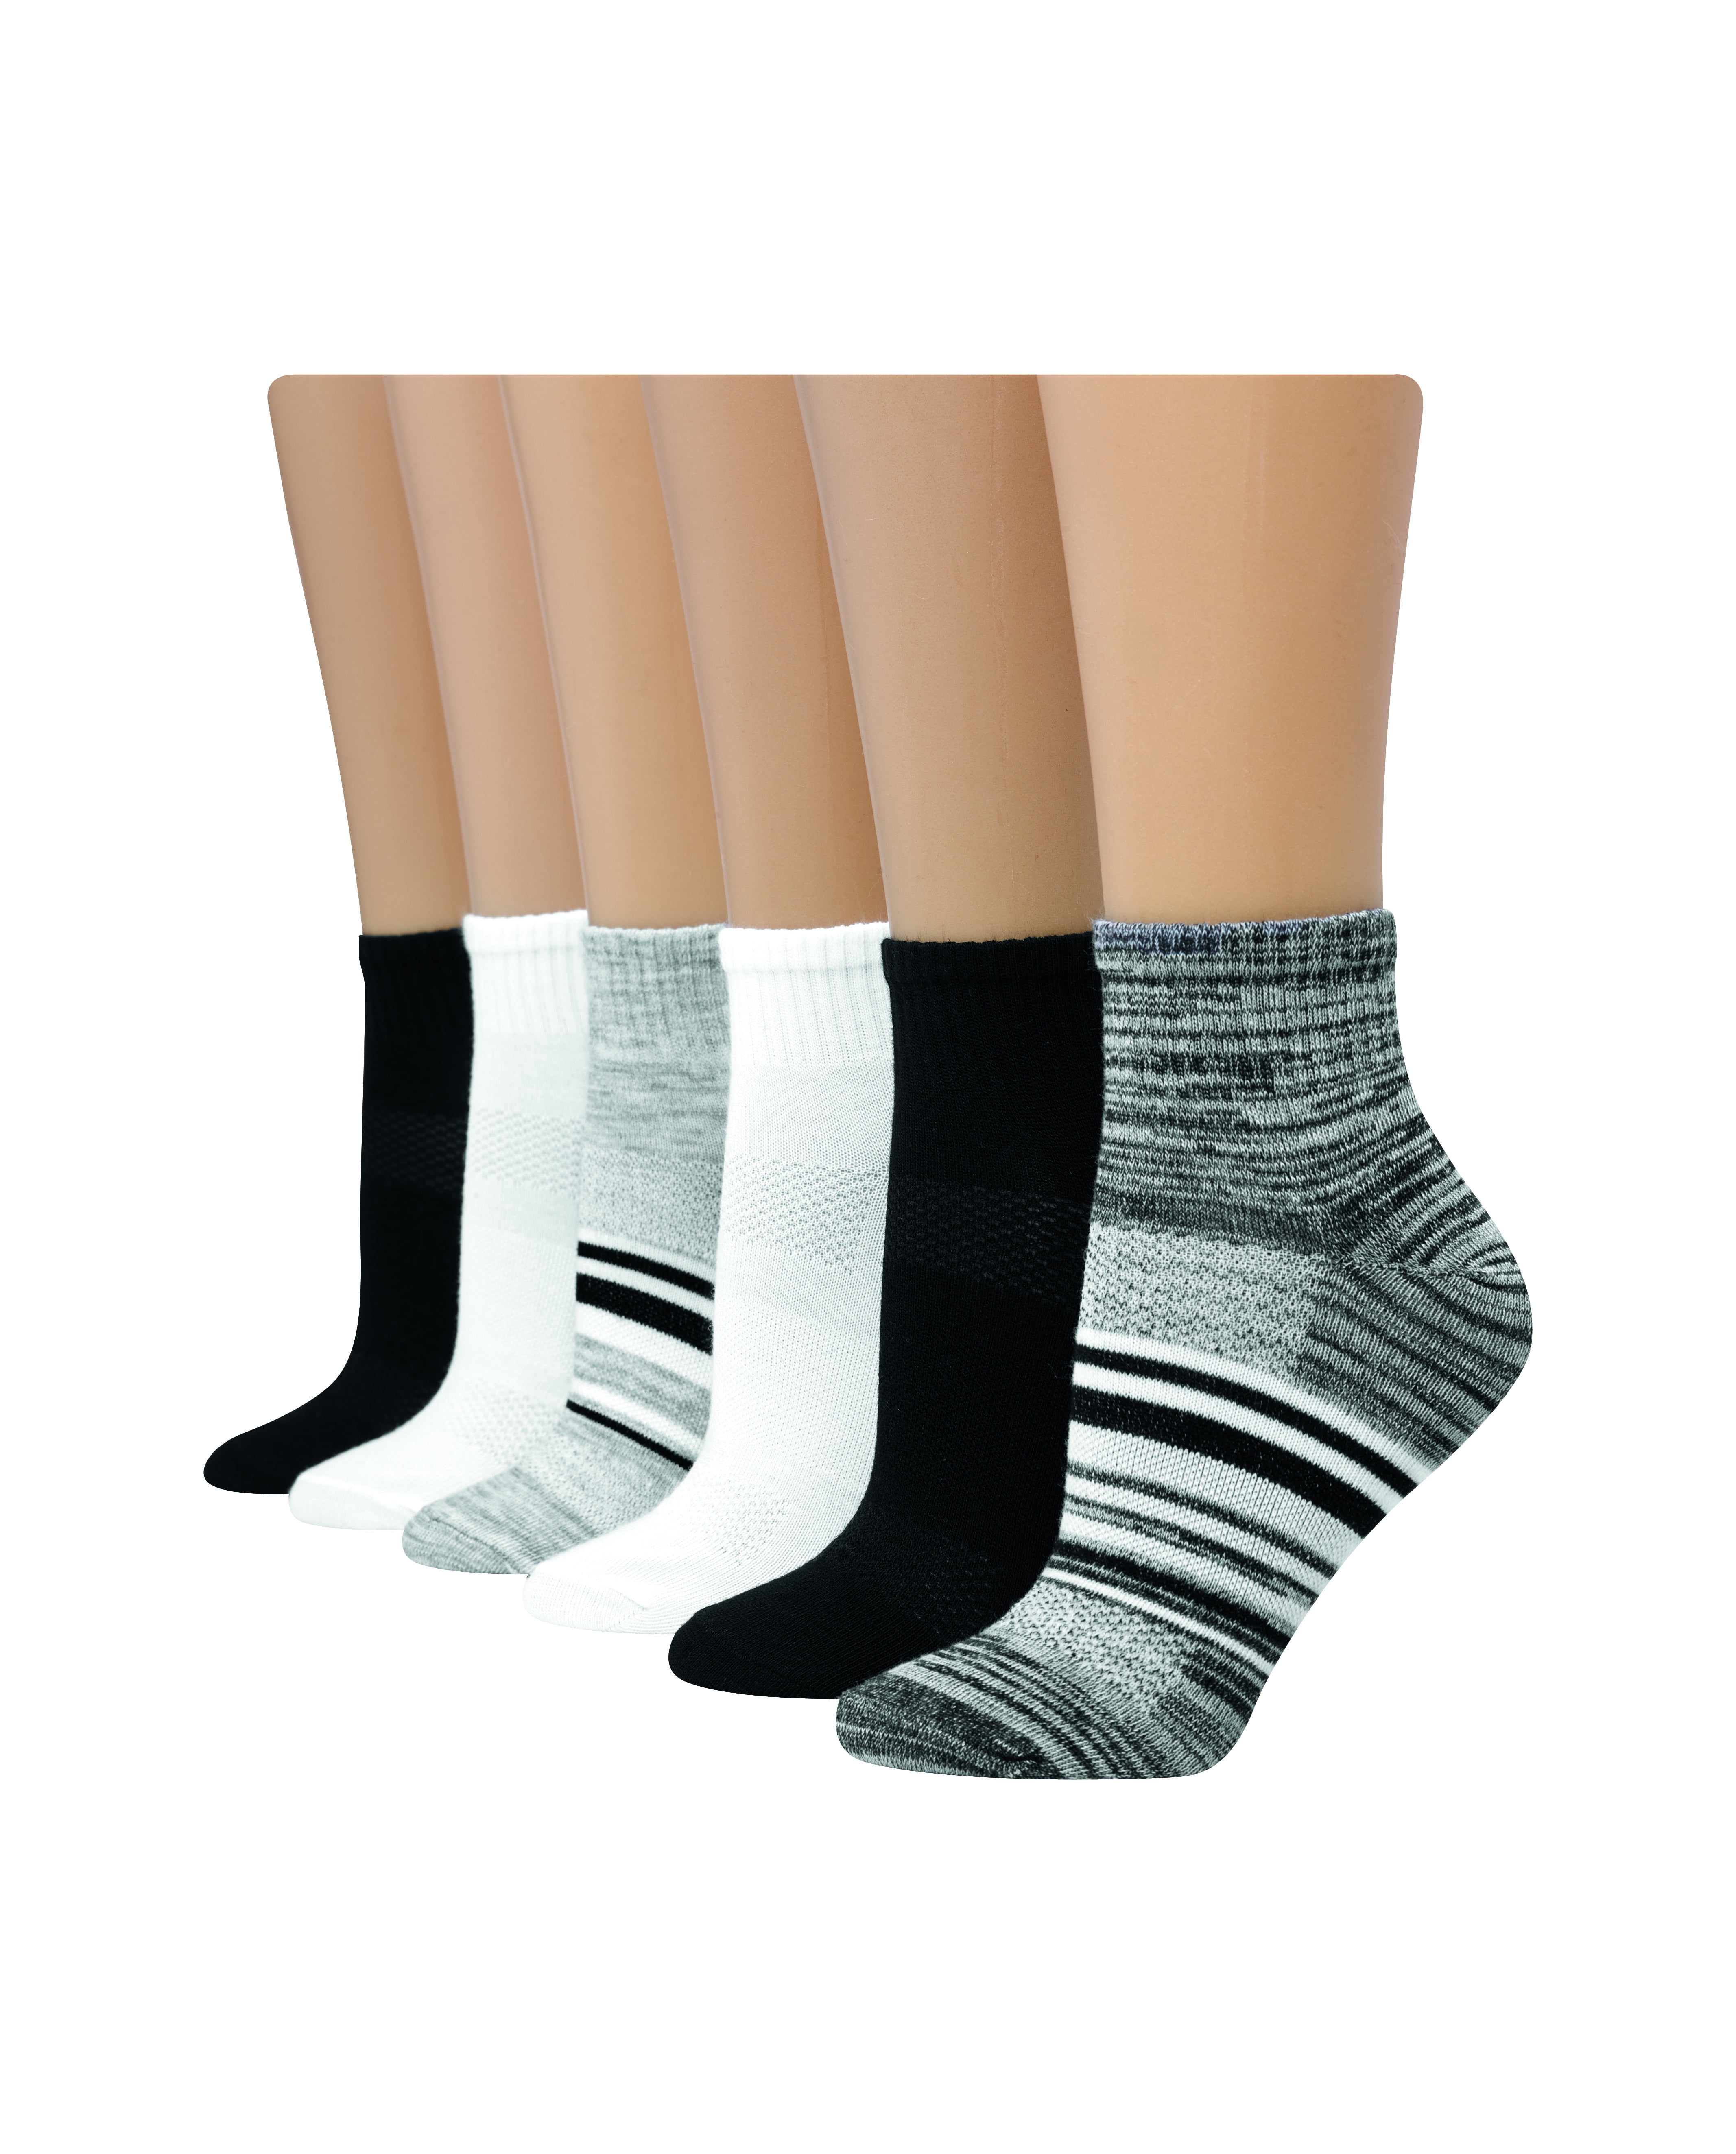 Hanes Women's Comfort Cool Lightweight Ankle Socks 6 pack - Walmart.com